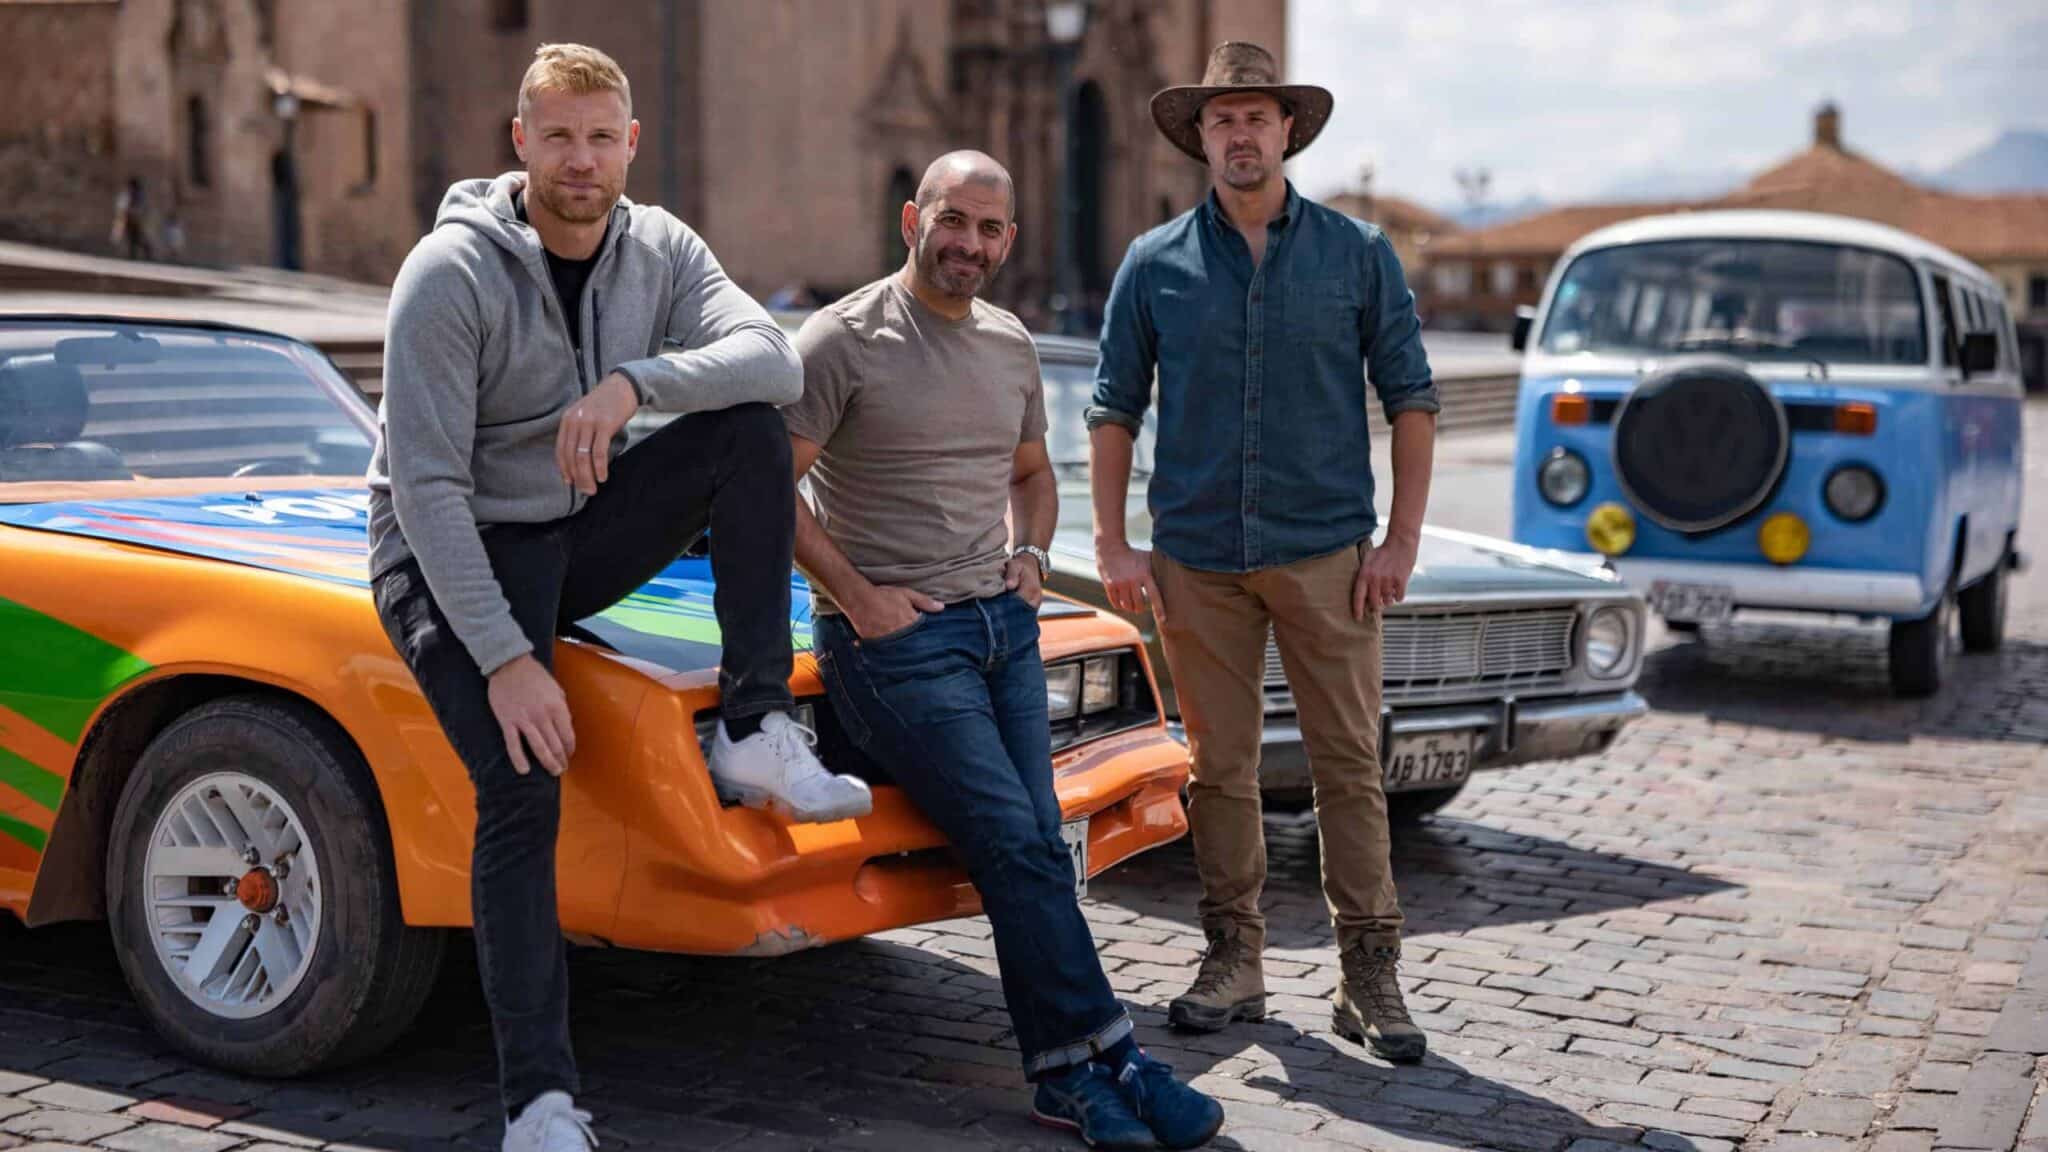 Erobrer Med vilje helvede Top Gear Season 30: Paddy, Freddie & Chris Return to South African TV